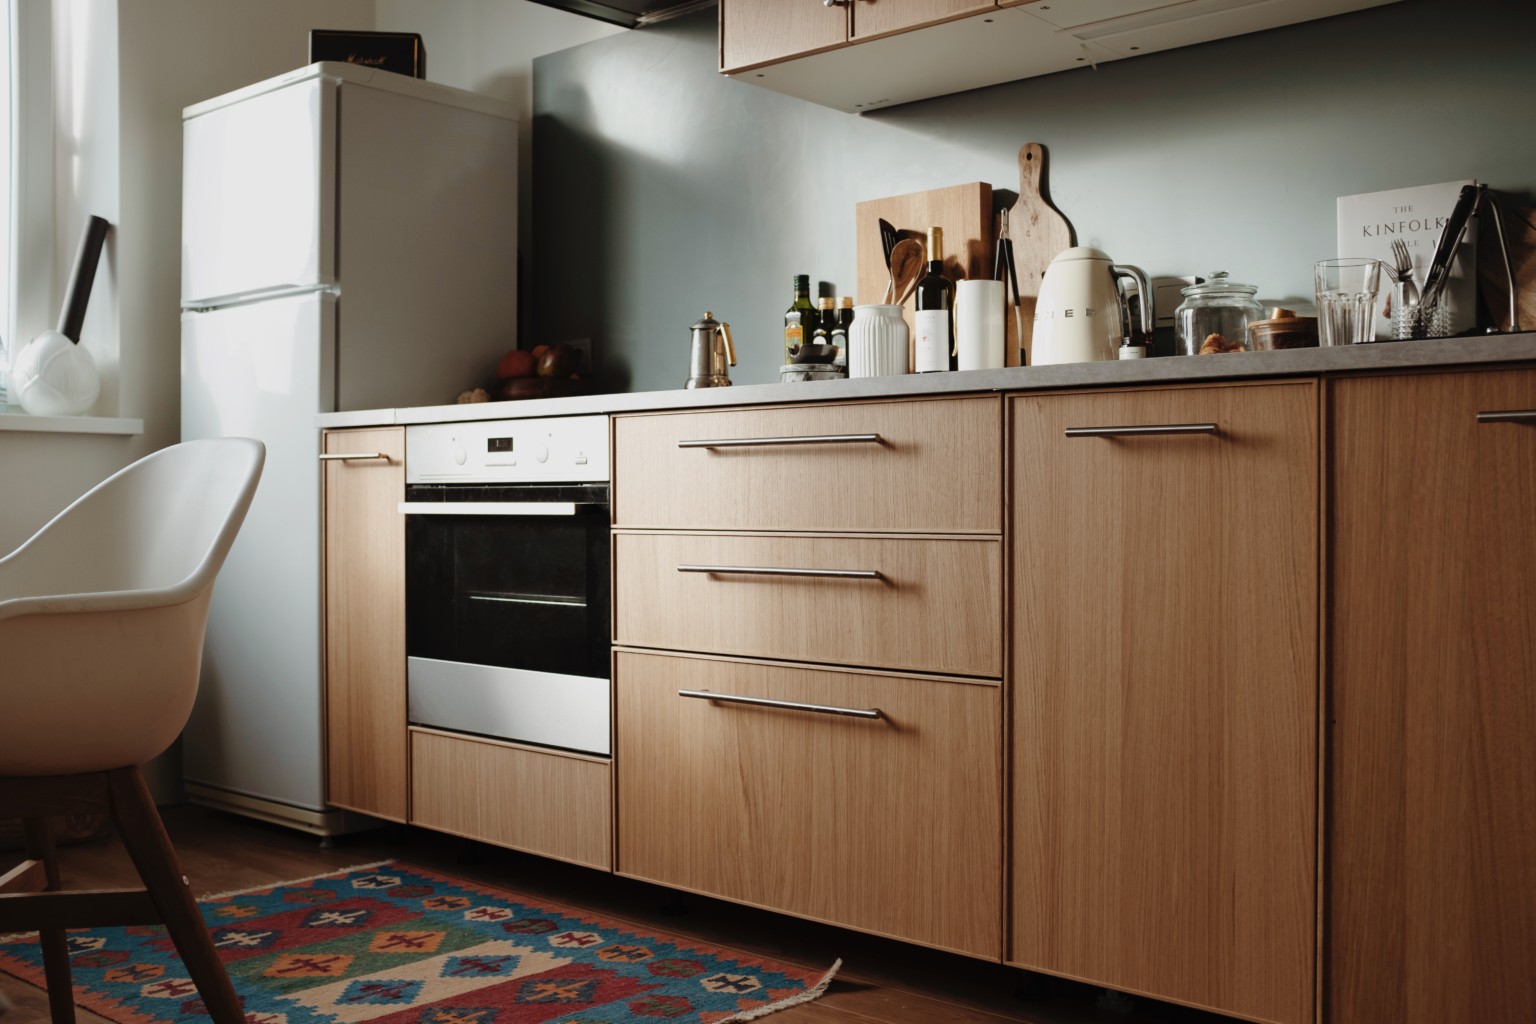 Kitchen Cabinet Handles - Simple DIY Home Upgrades